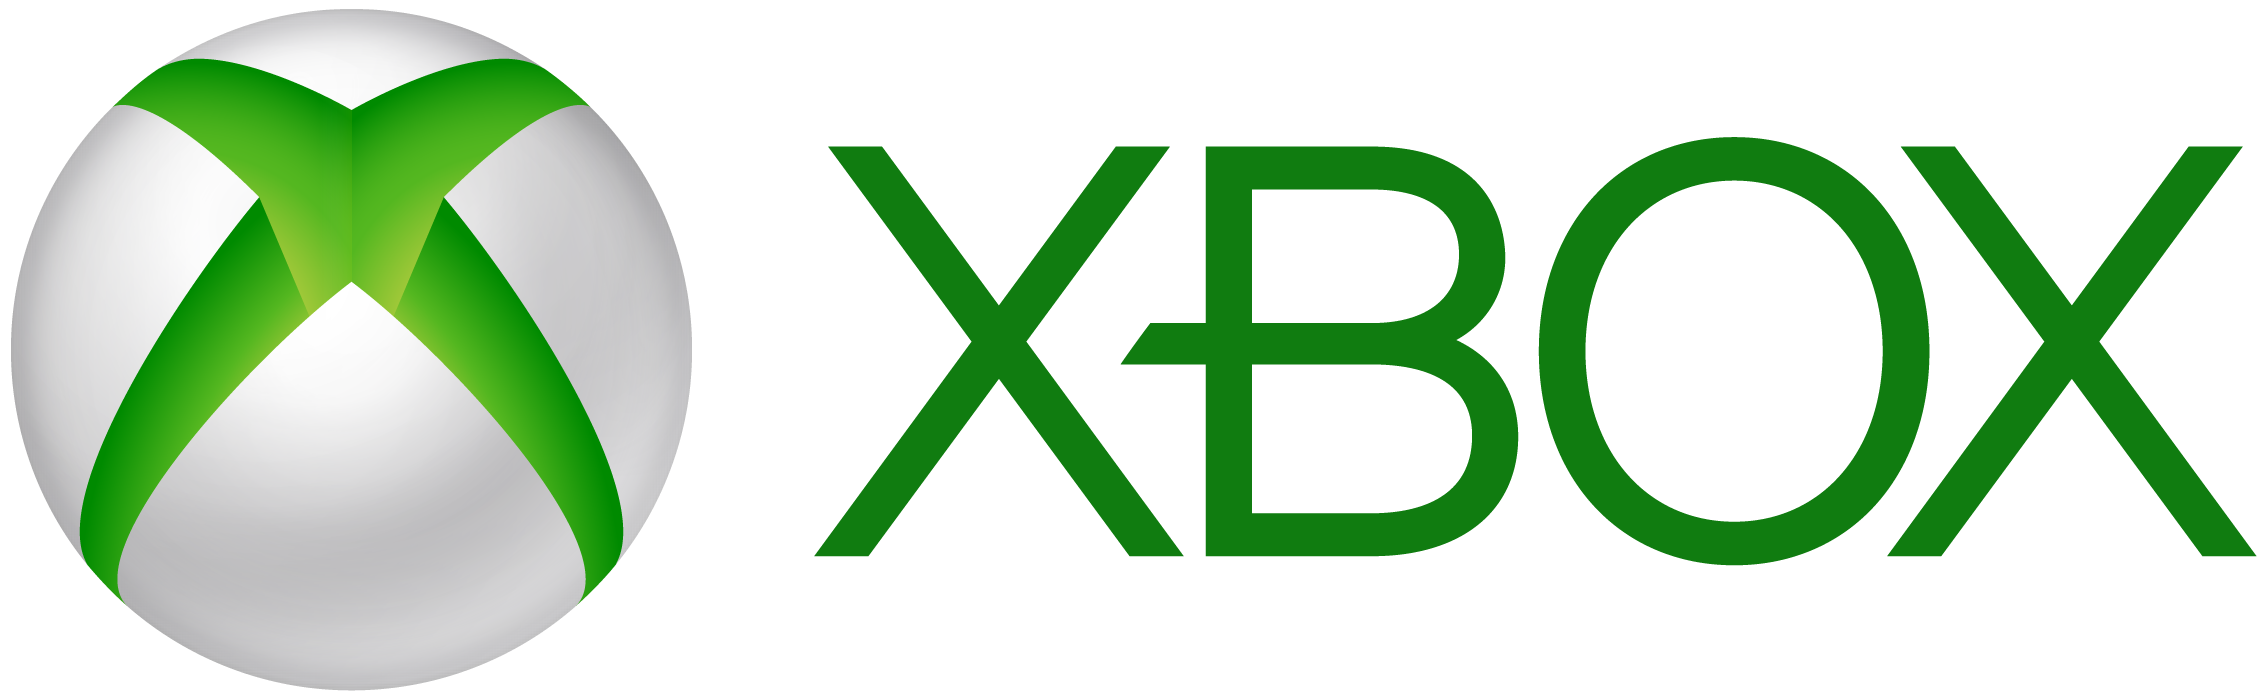 Xbox_2013_Logo